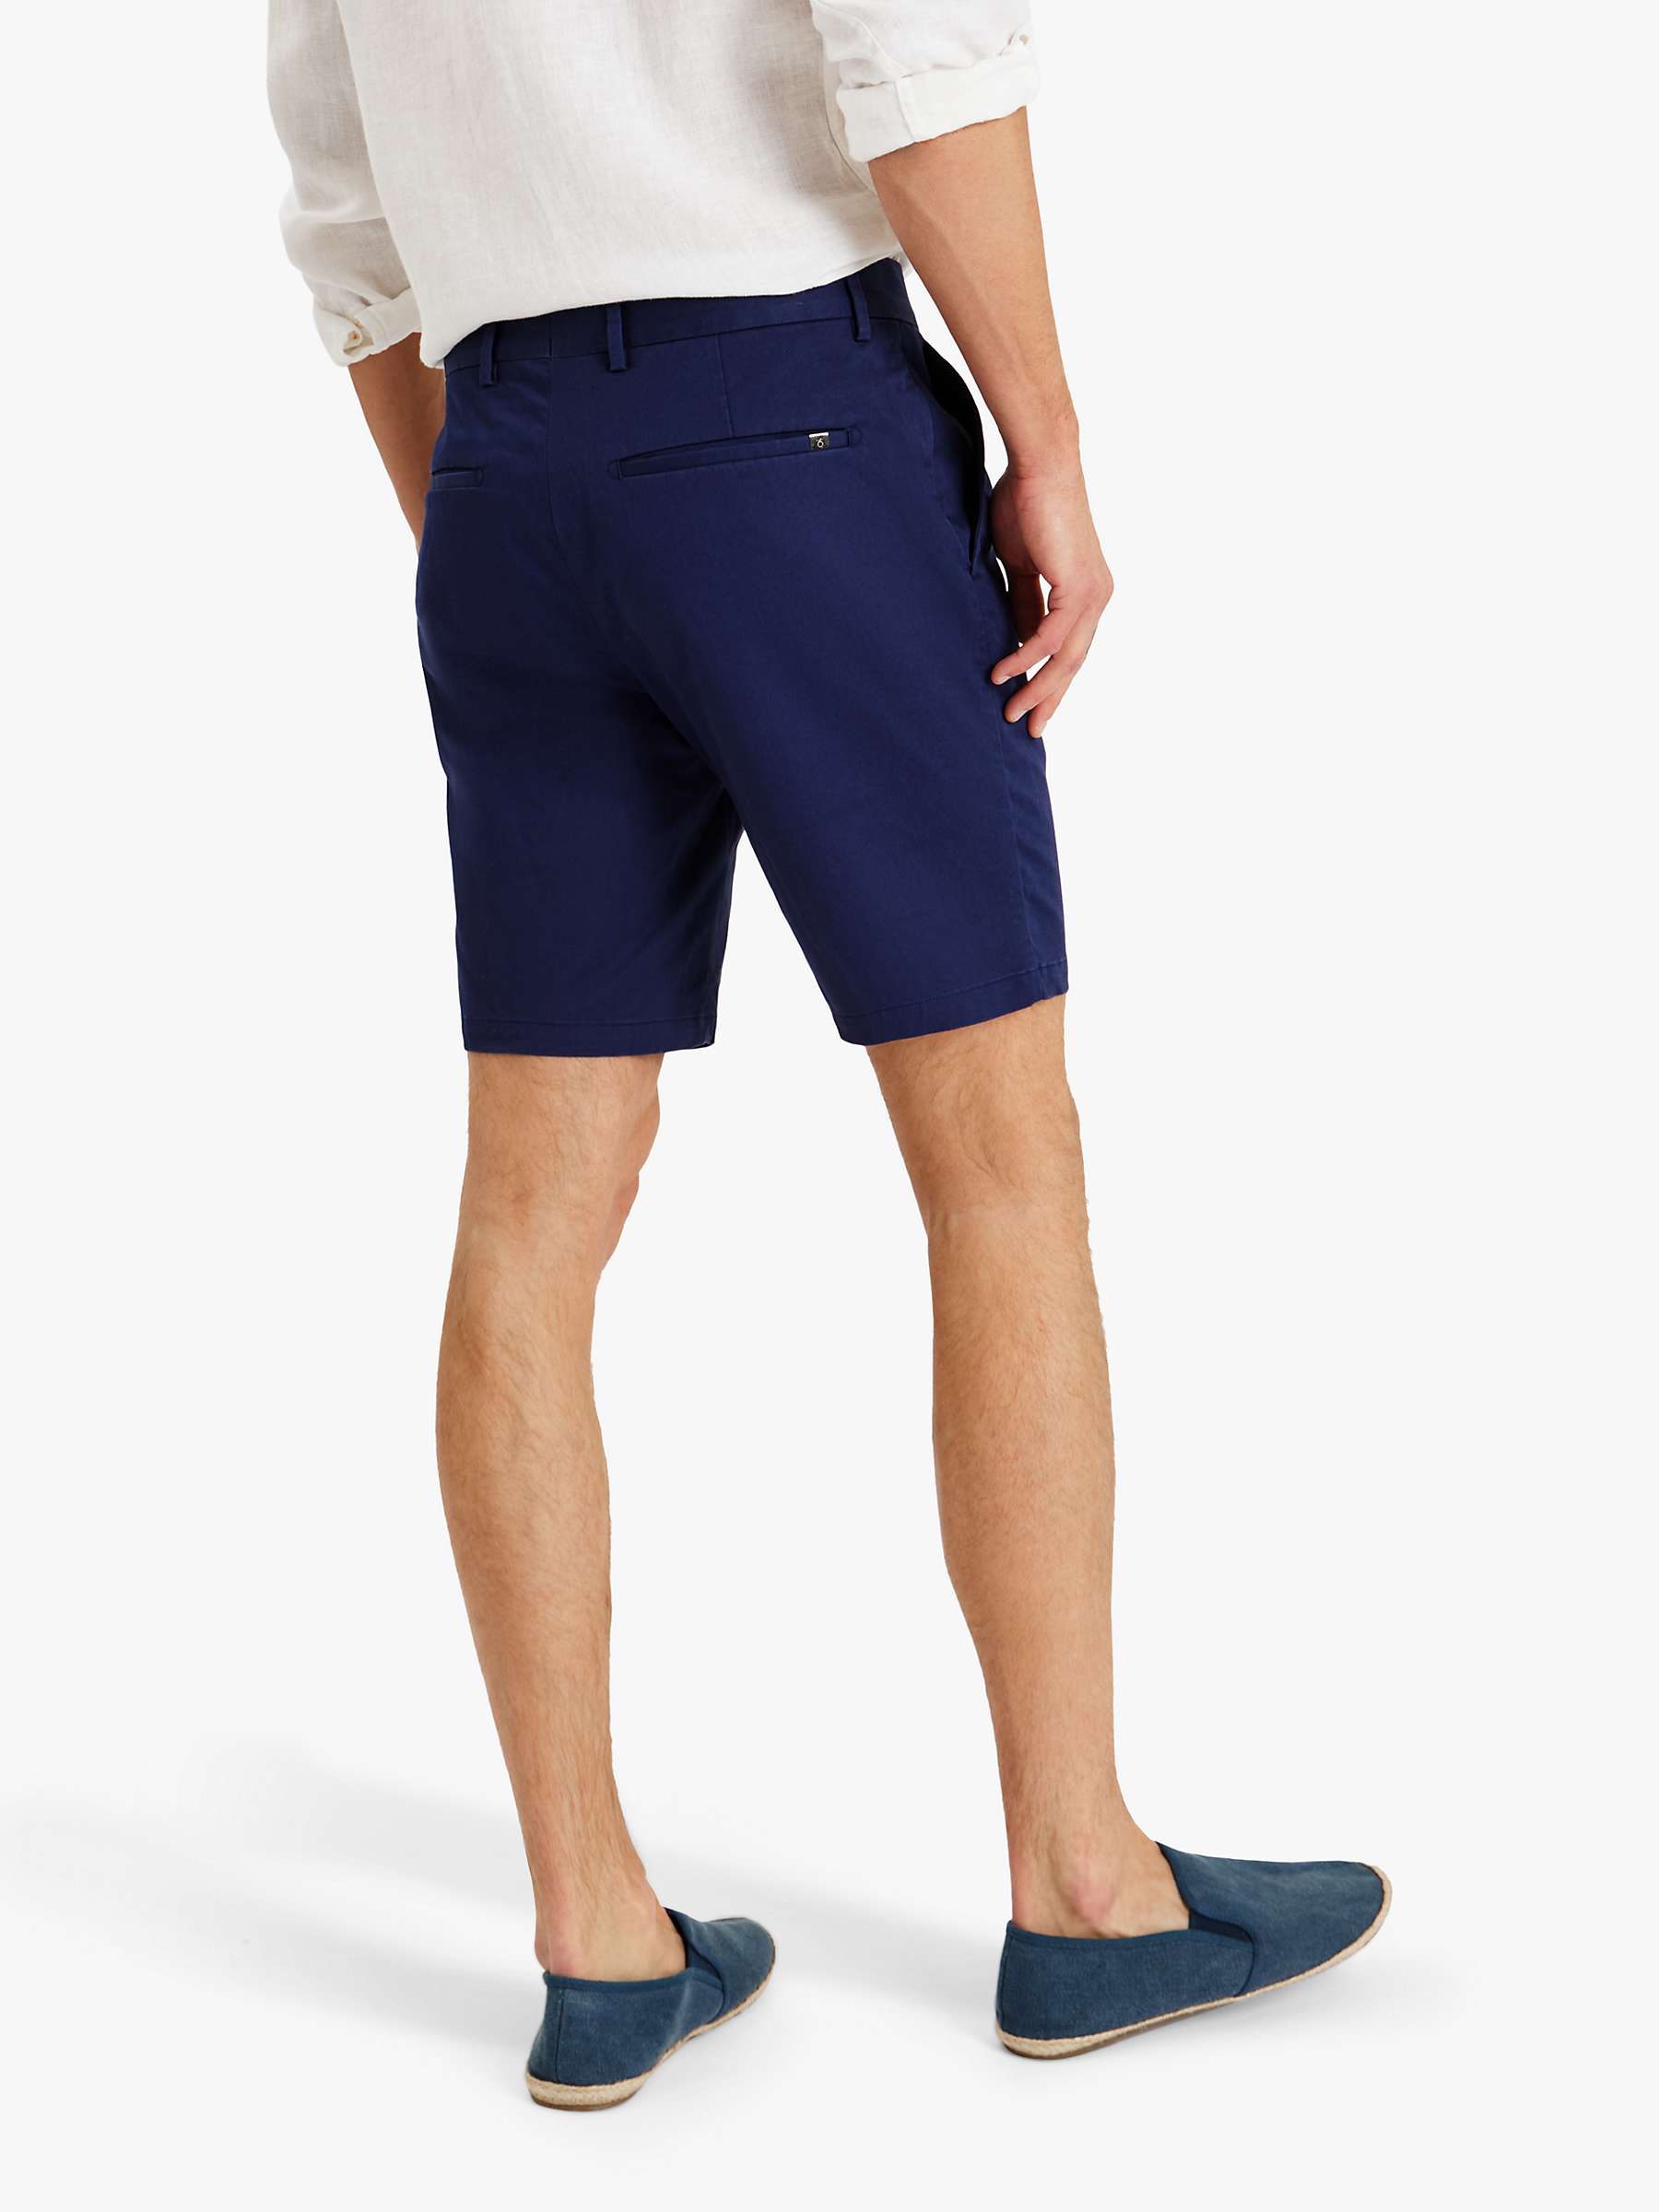 Buy SPOKE Sharps Cotton Blend Regular Thigh Shorts Online at johnlewis.com